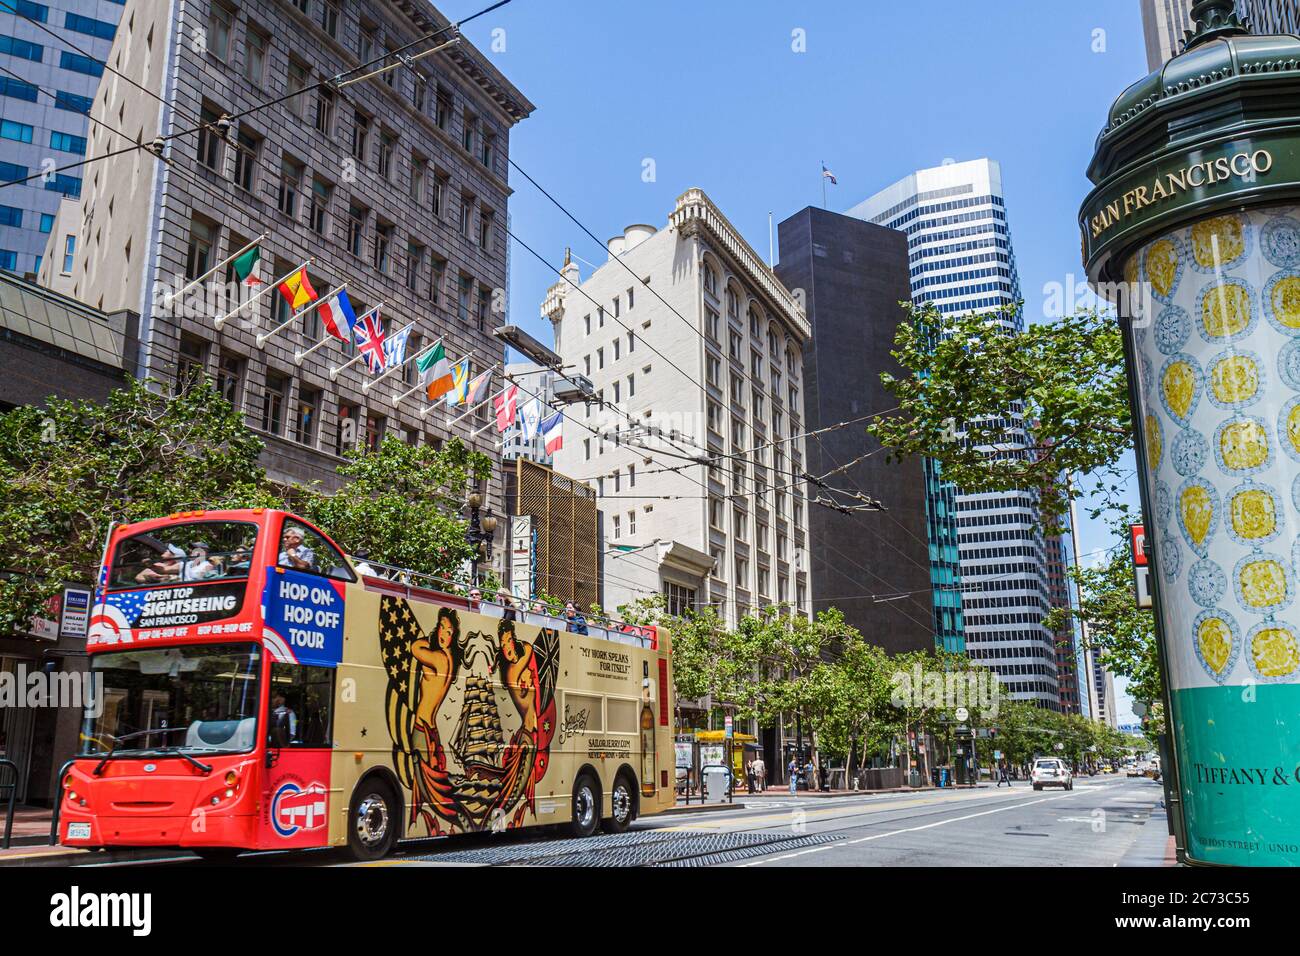 San Francisco California,Market Street,downtown,street scene,building double decker tour bus,coach,flags,ad kiosk,Tiffany,long thoroughfare,high rise Stock Photo